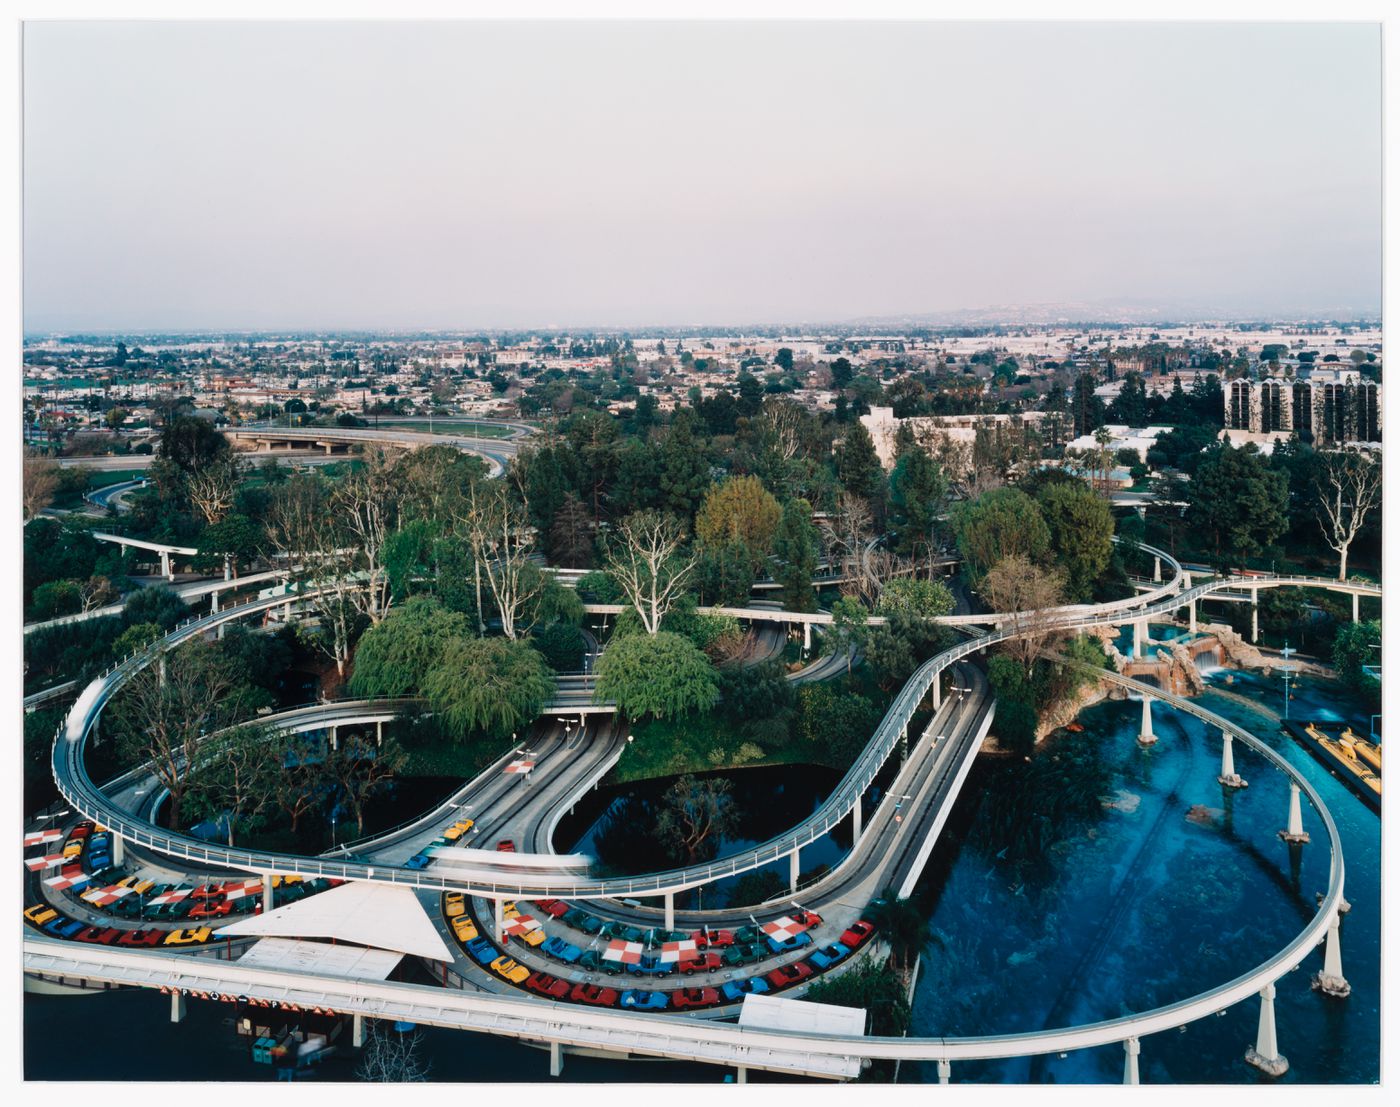 Autopia, Tomorrowland, Disneyland, Anaheim, California